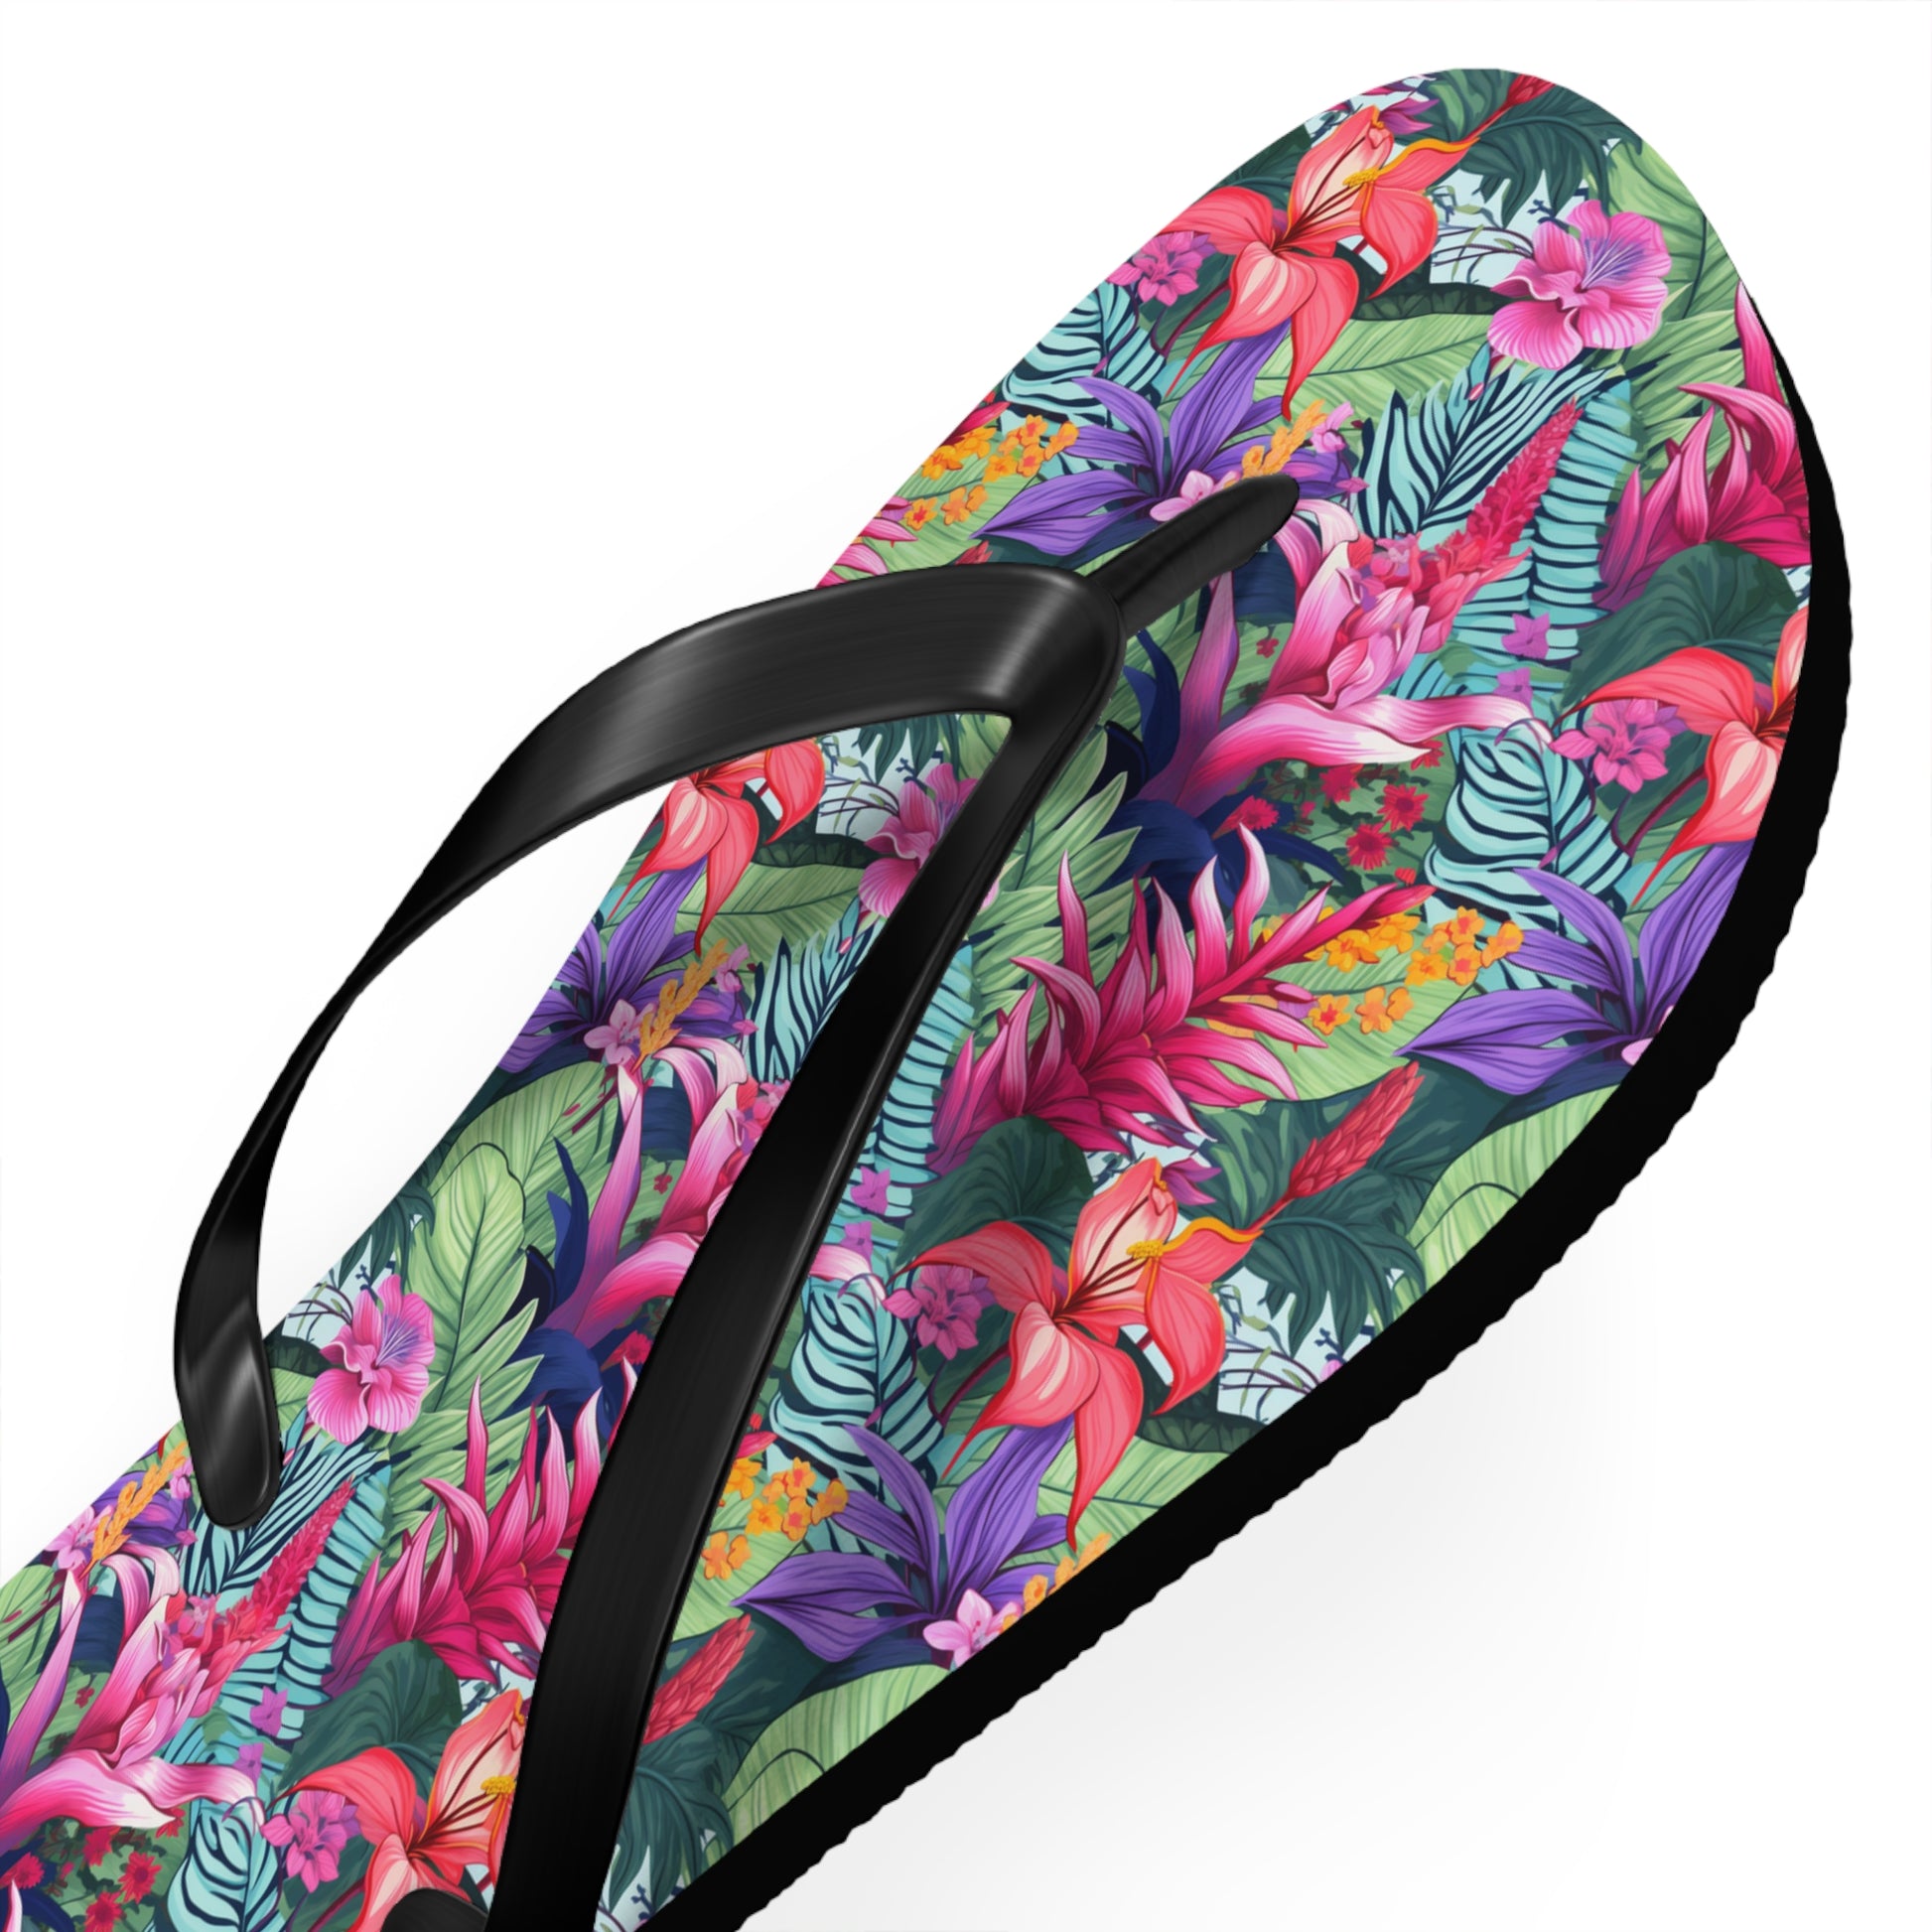 Tropical Beach Flip Flops - Butiful